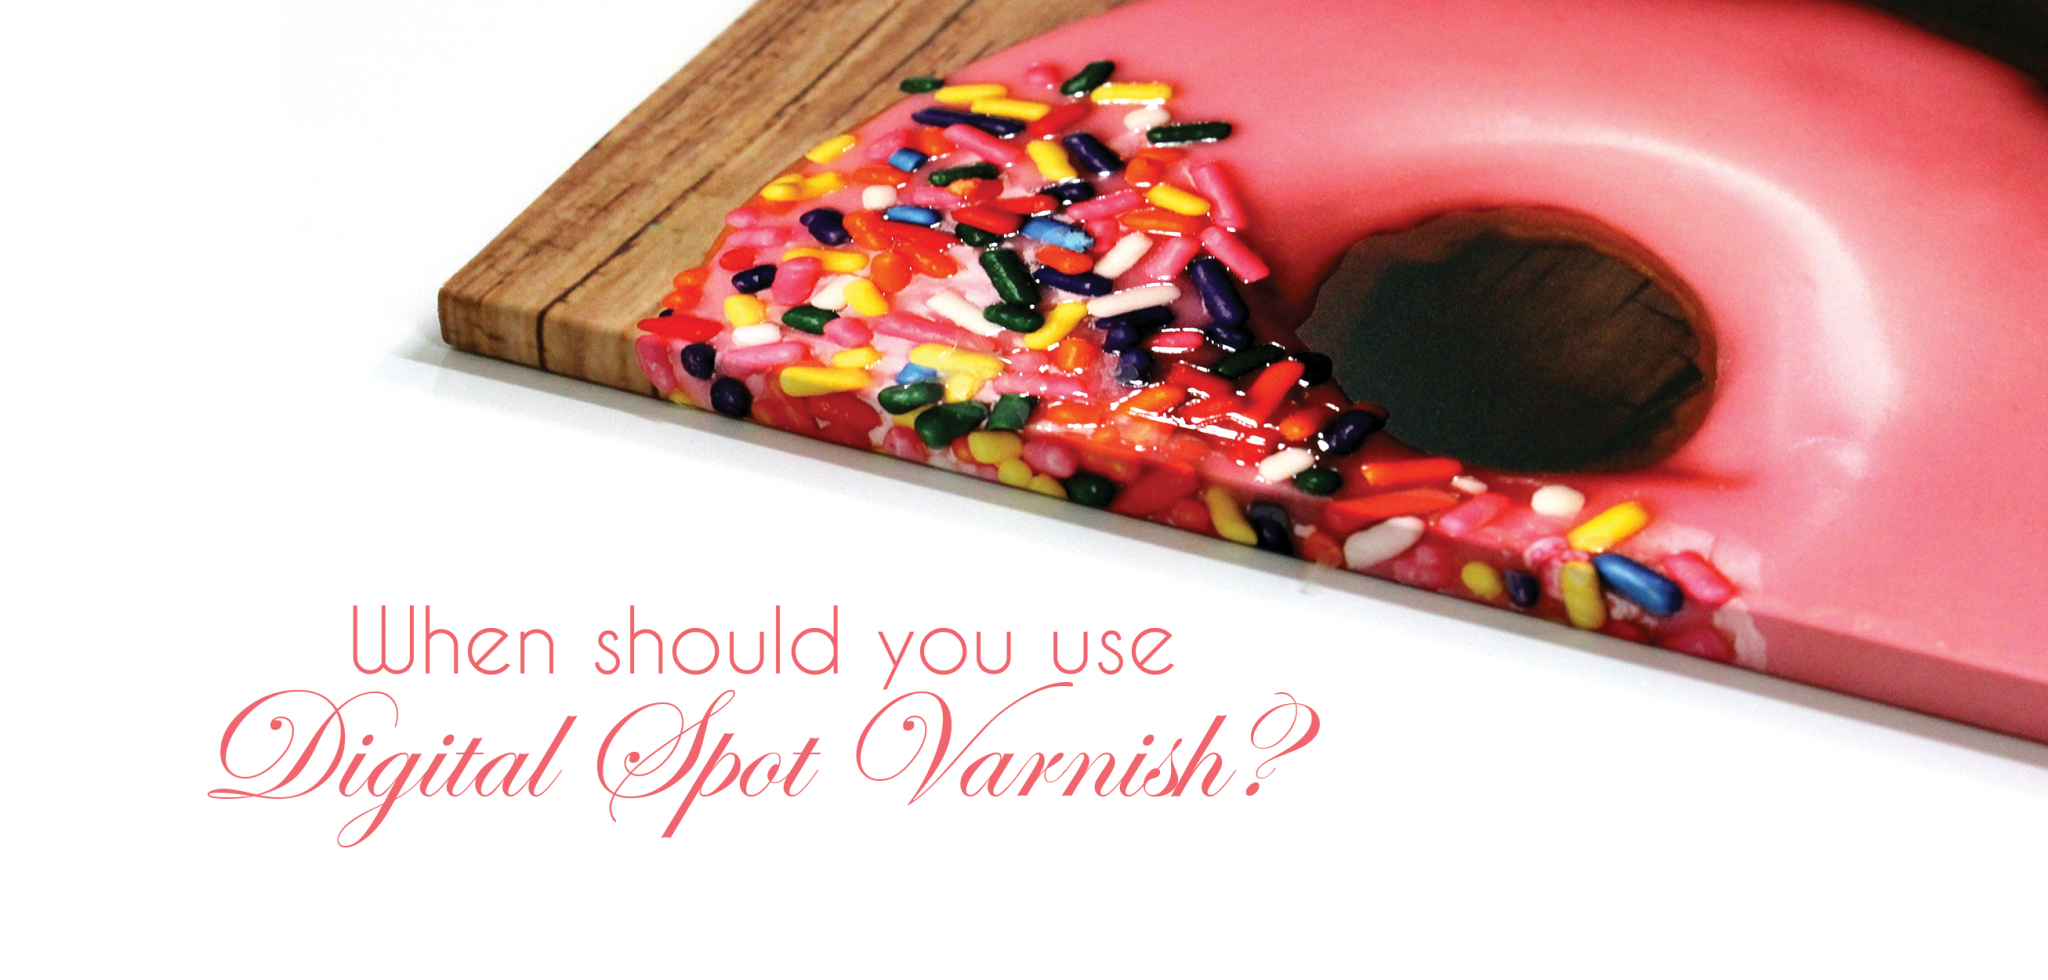 When Should You Use Digital Spot Varnish?